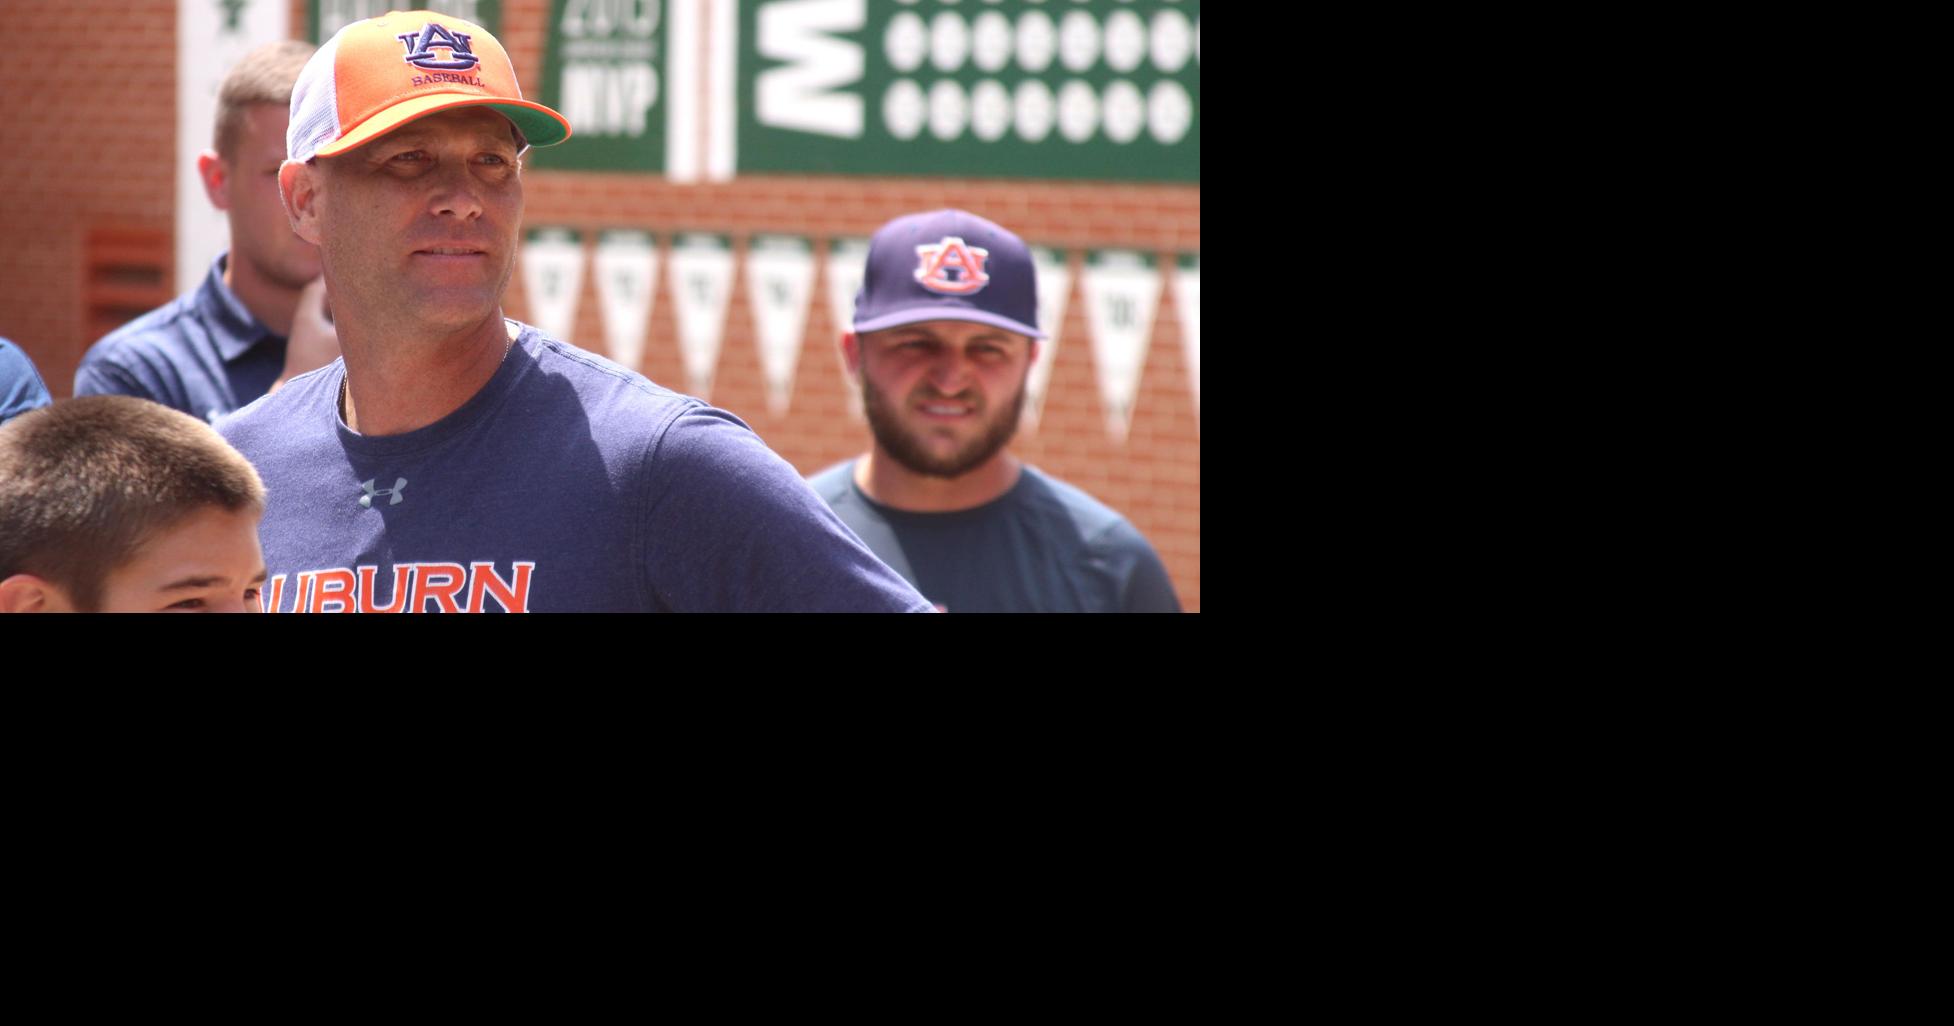 Star to student: Auburn baseball great Tim Hudson returns to